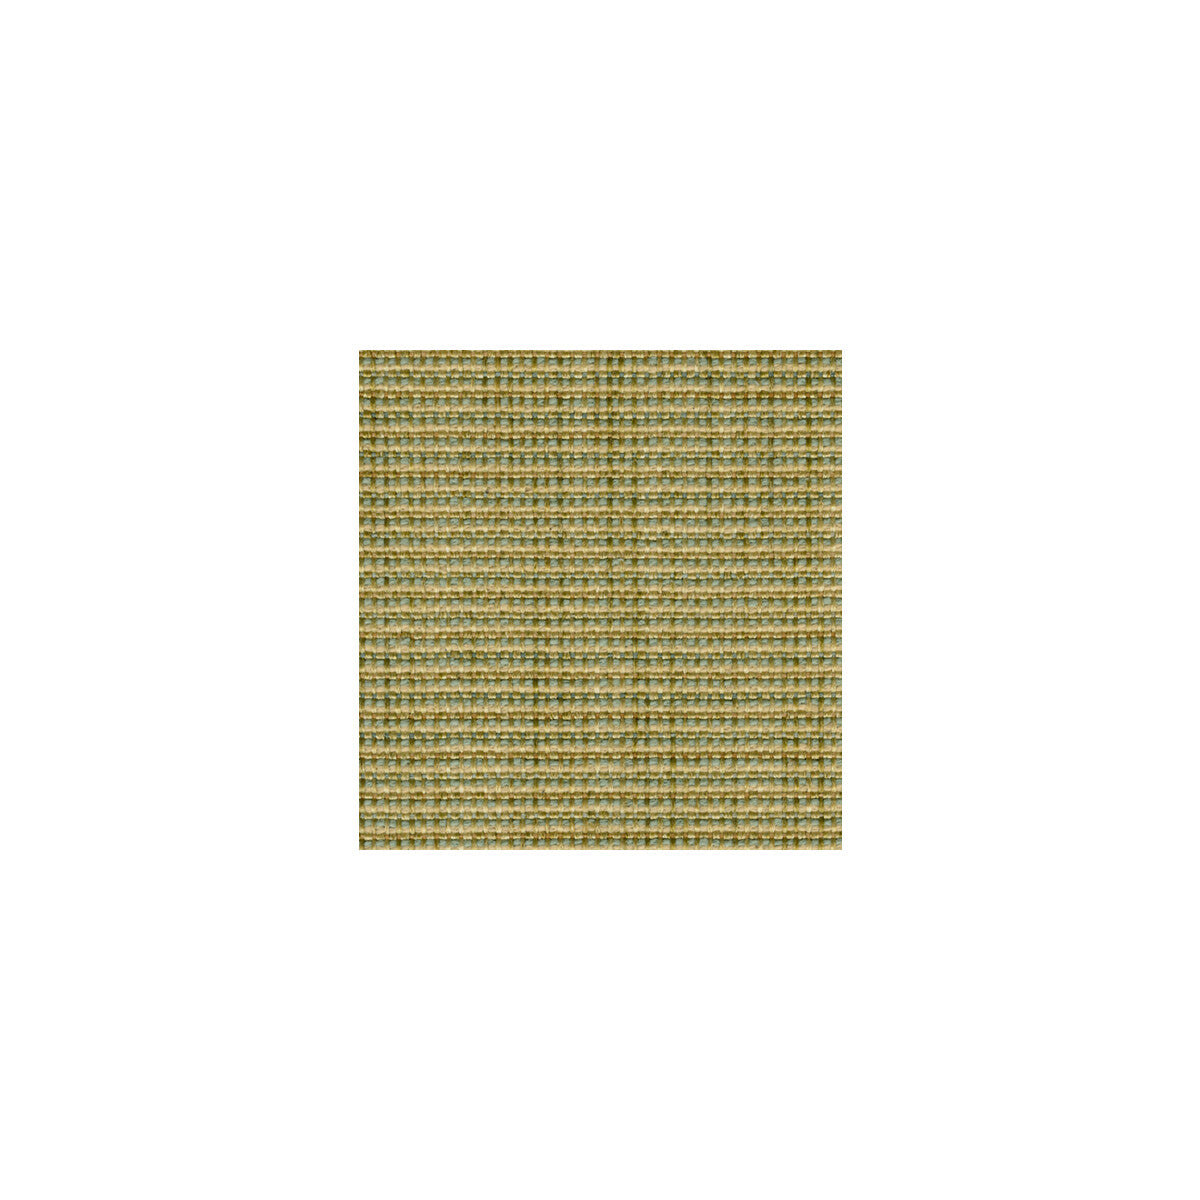 Kravet Smart fabric in 30665-3 color - pattern 30665.3.0 - by Kravet Smart